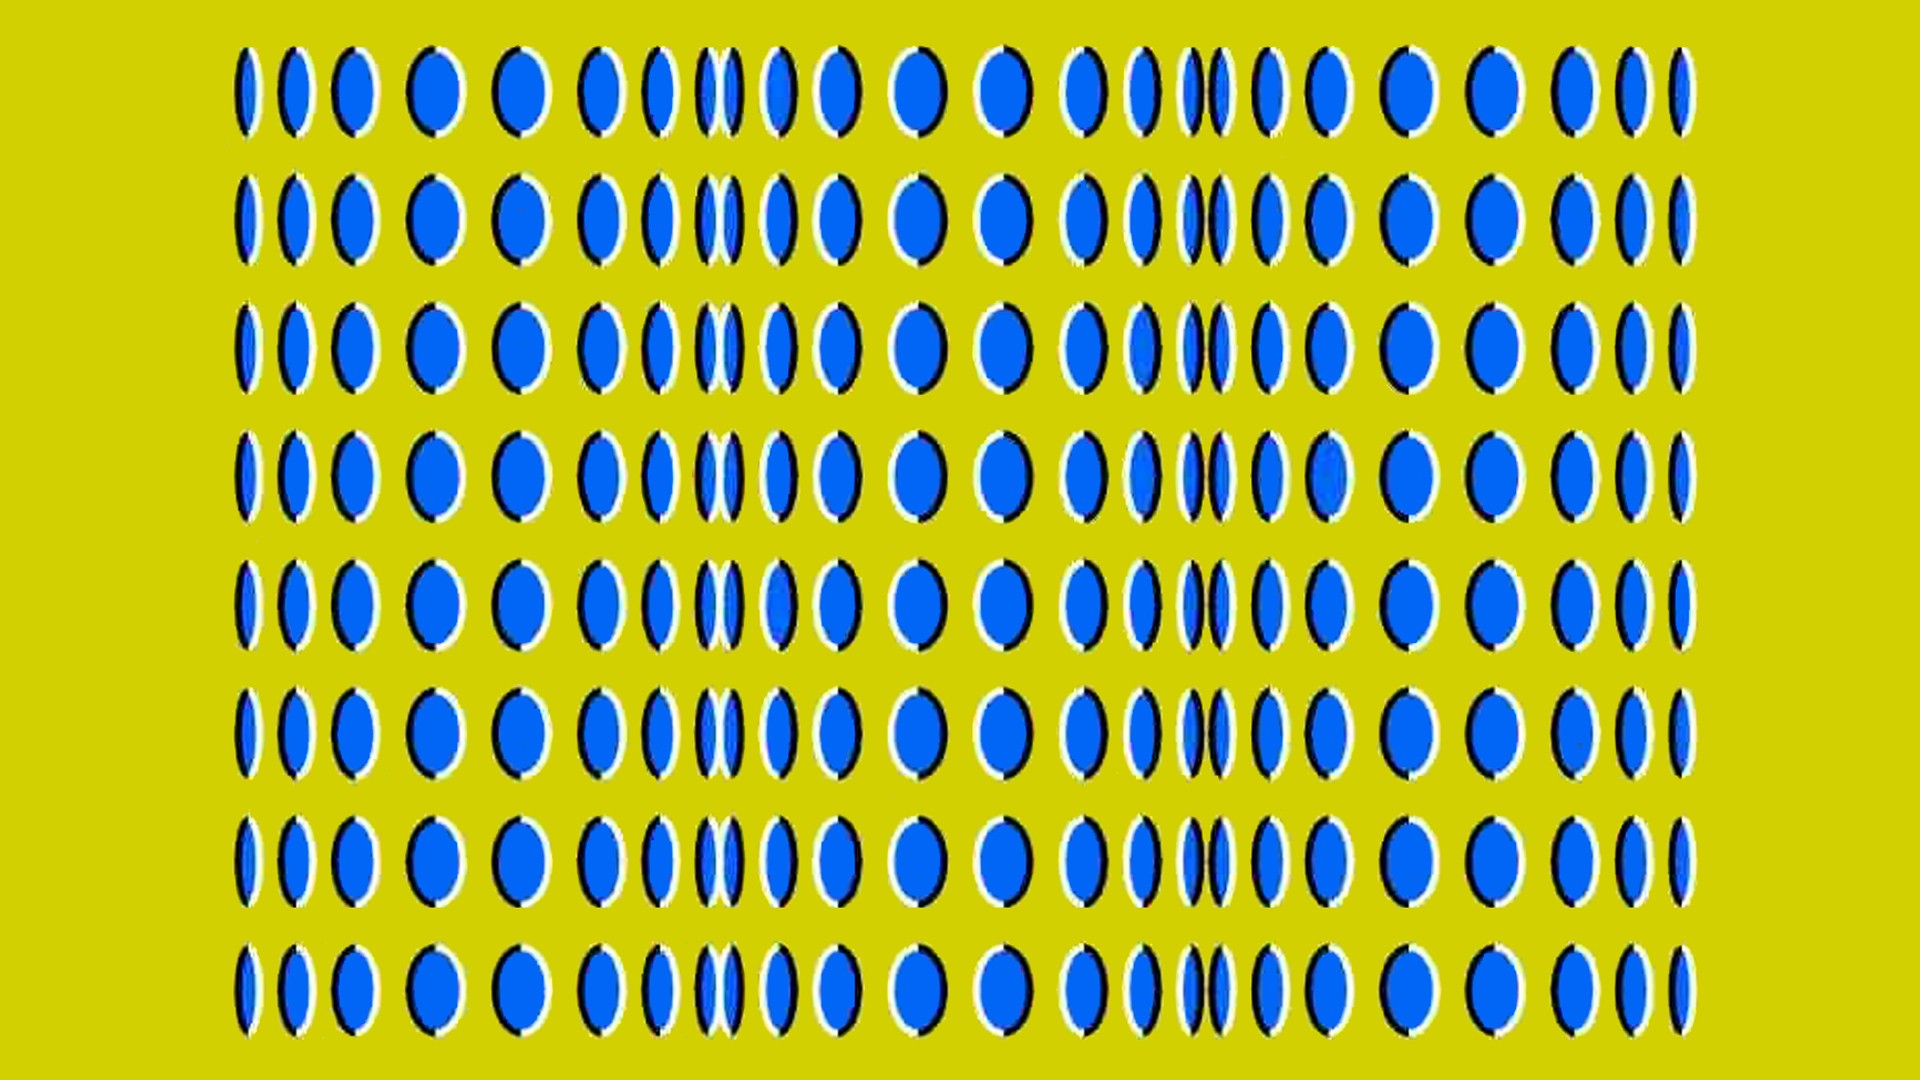 General 1920x1080 optical illusion yellow background polka dots